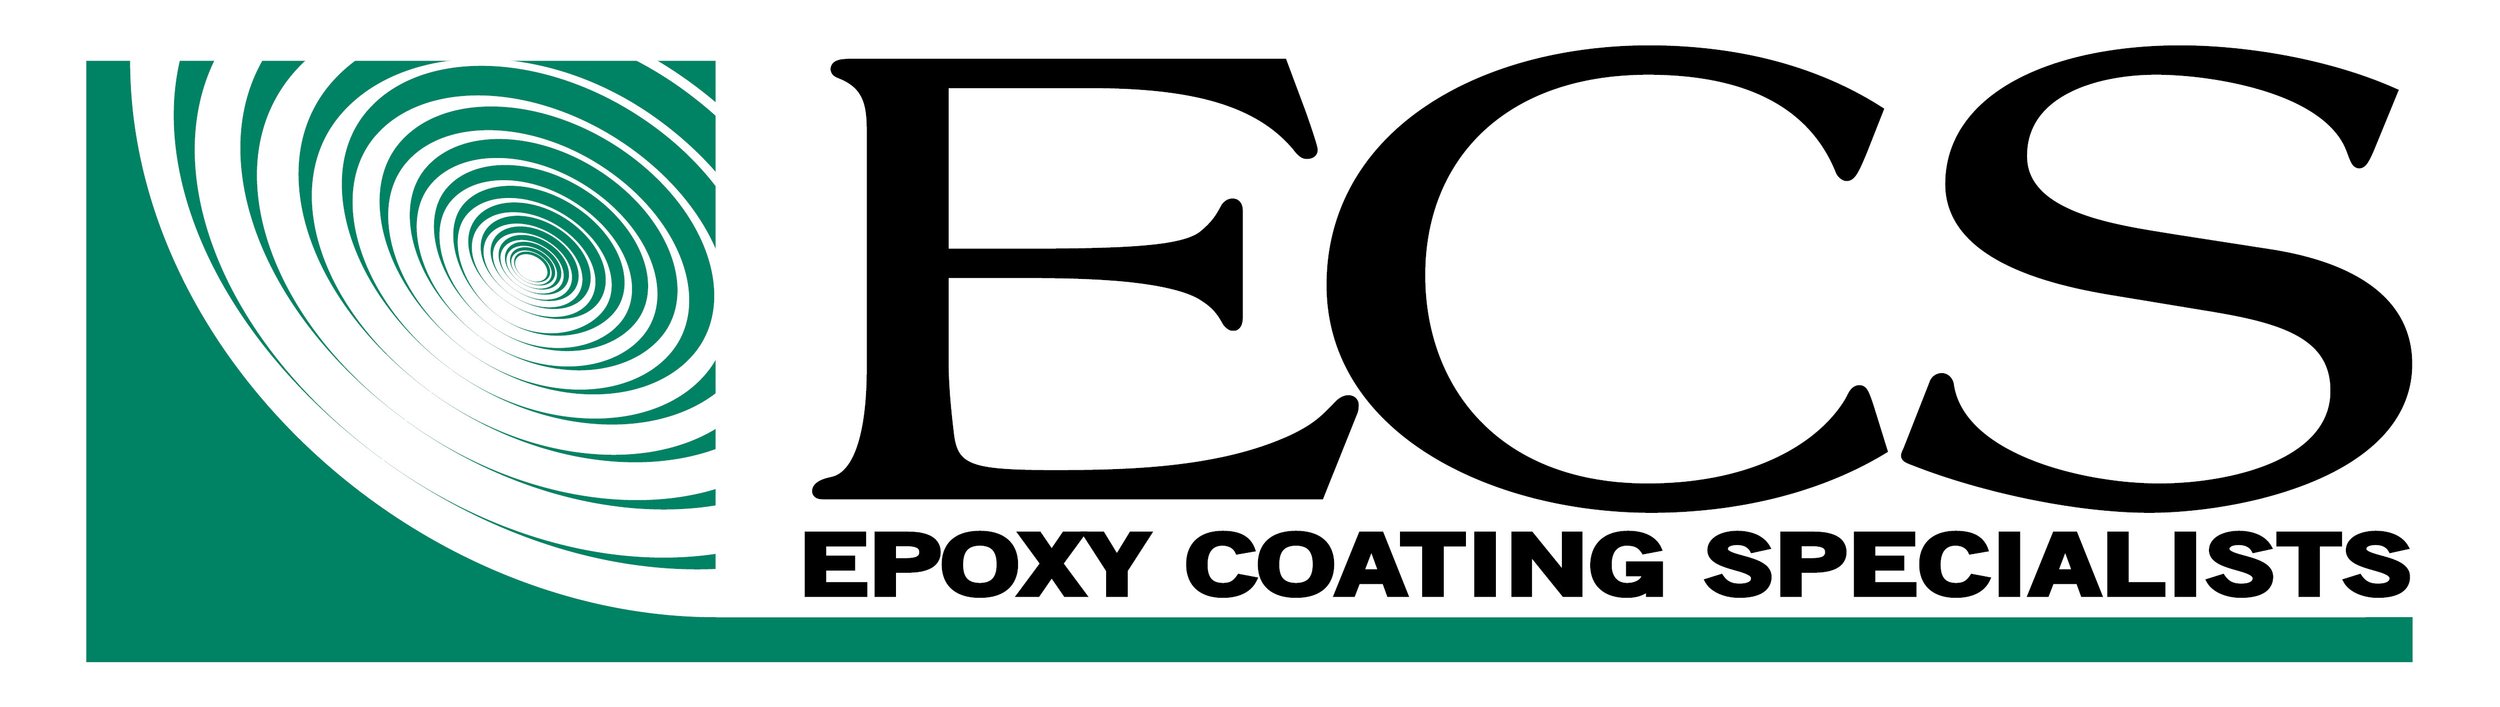 Epoxy Coating Specialits Logo - Web.jpg